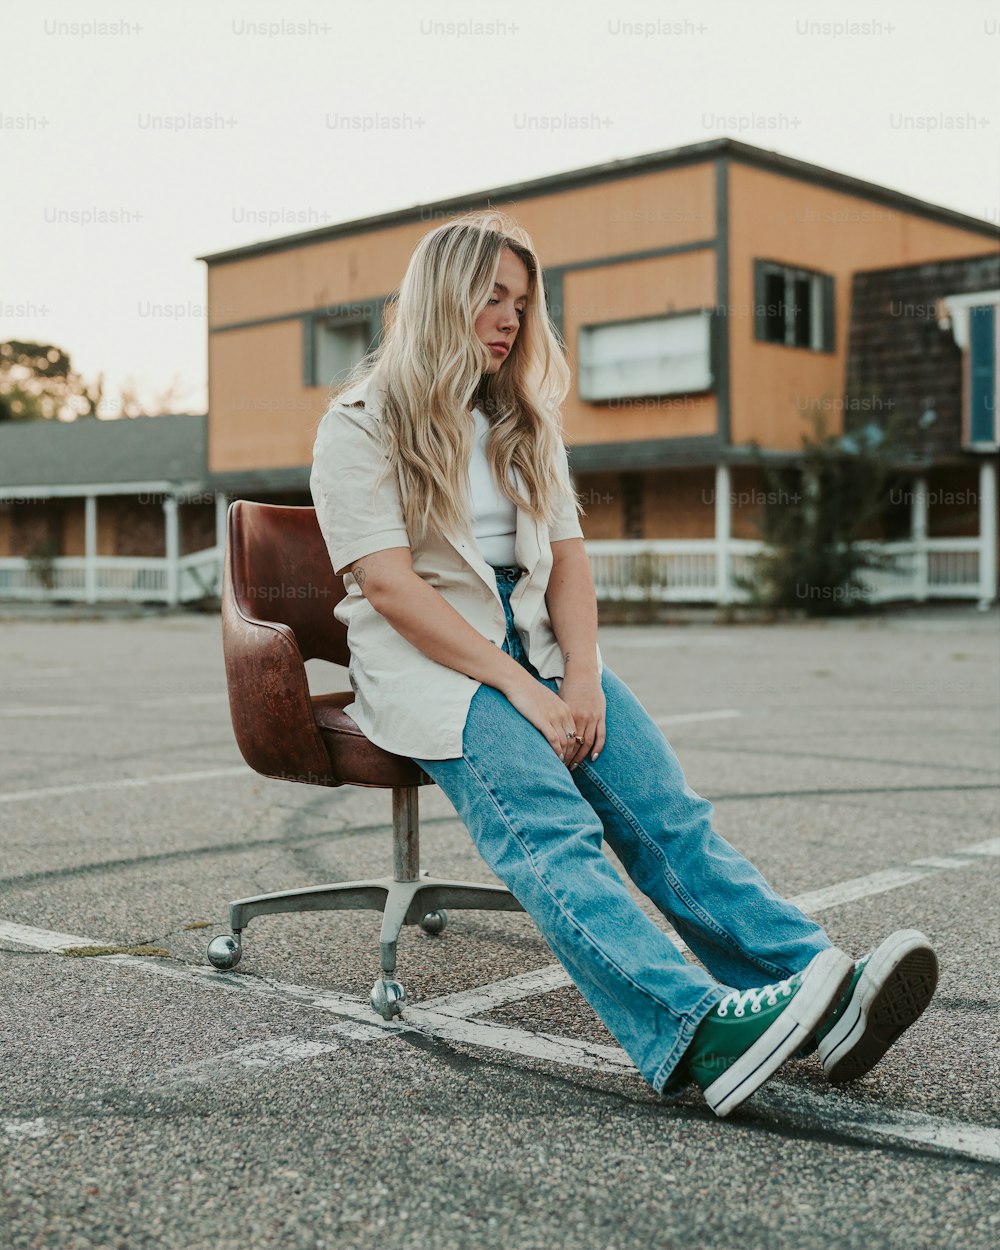 Long Legs Fashion Blonde Girl Sitting on Bench. Street Fashion. Stock Photo